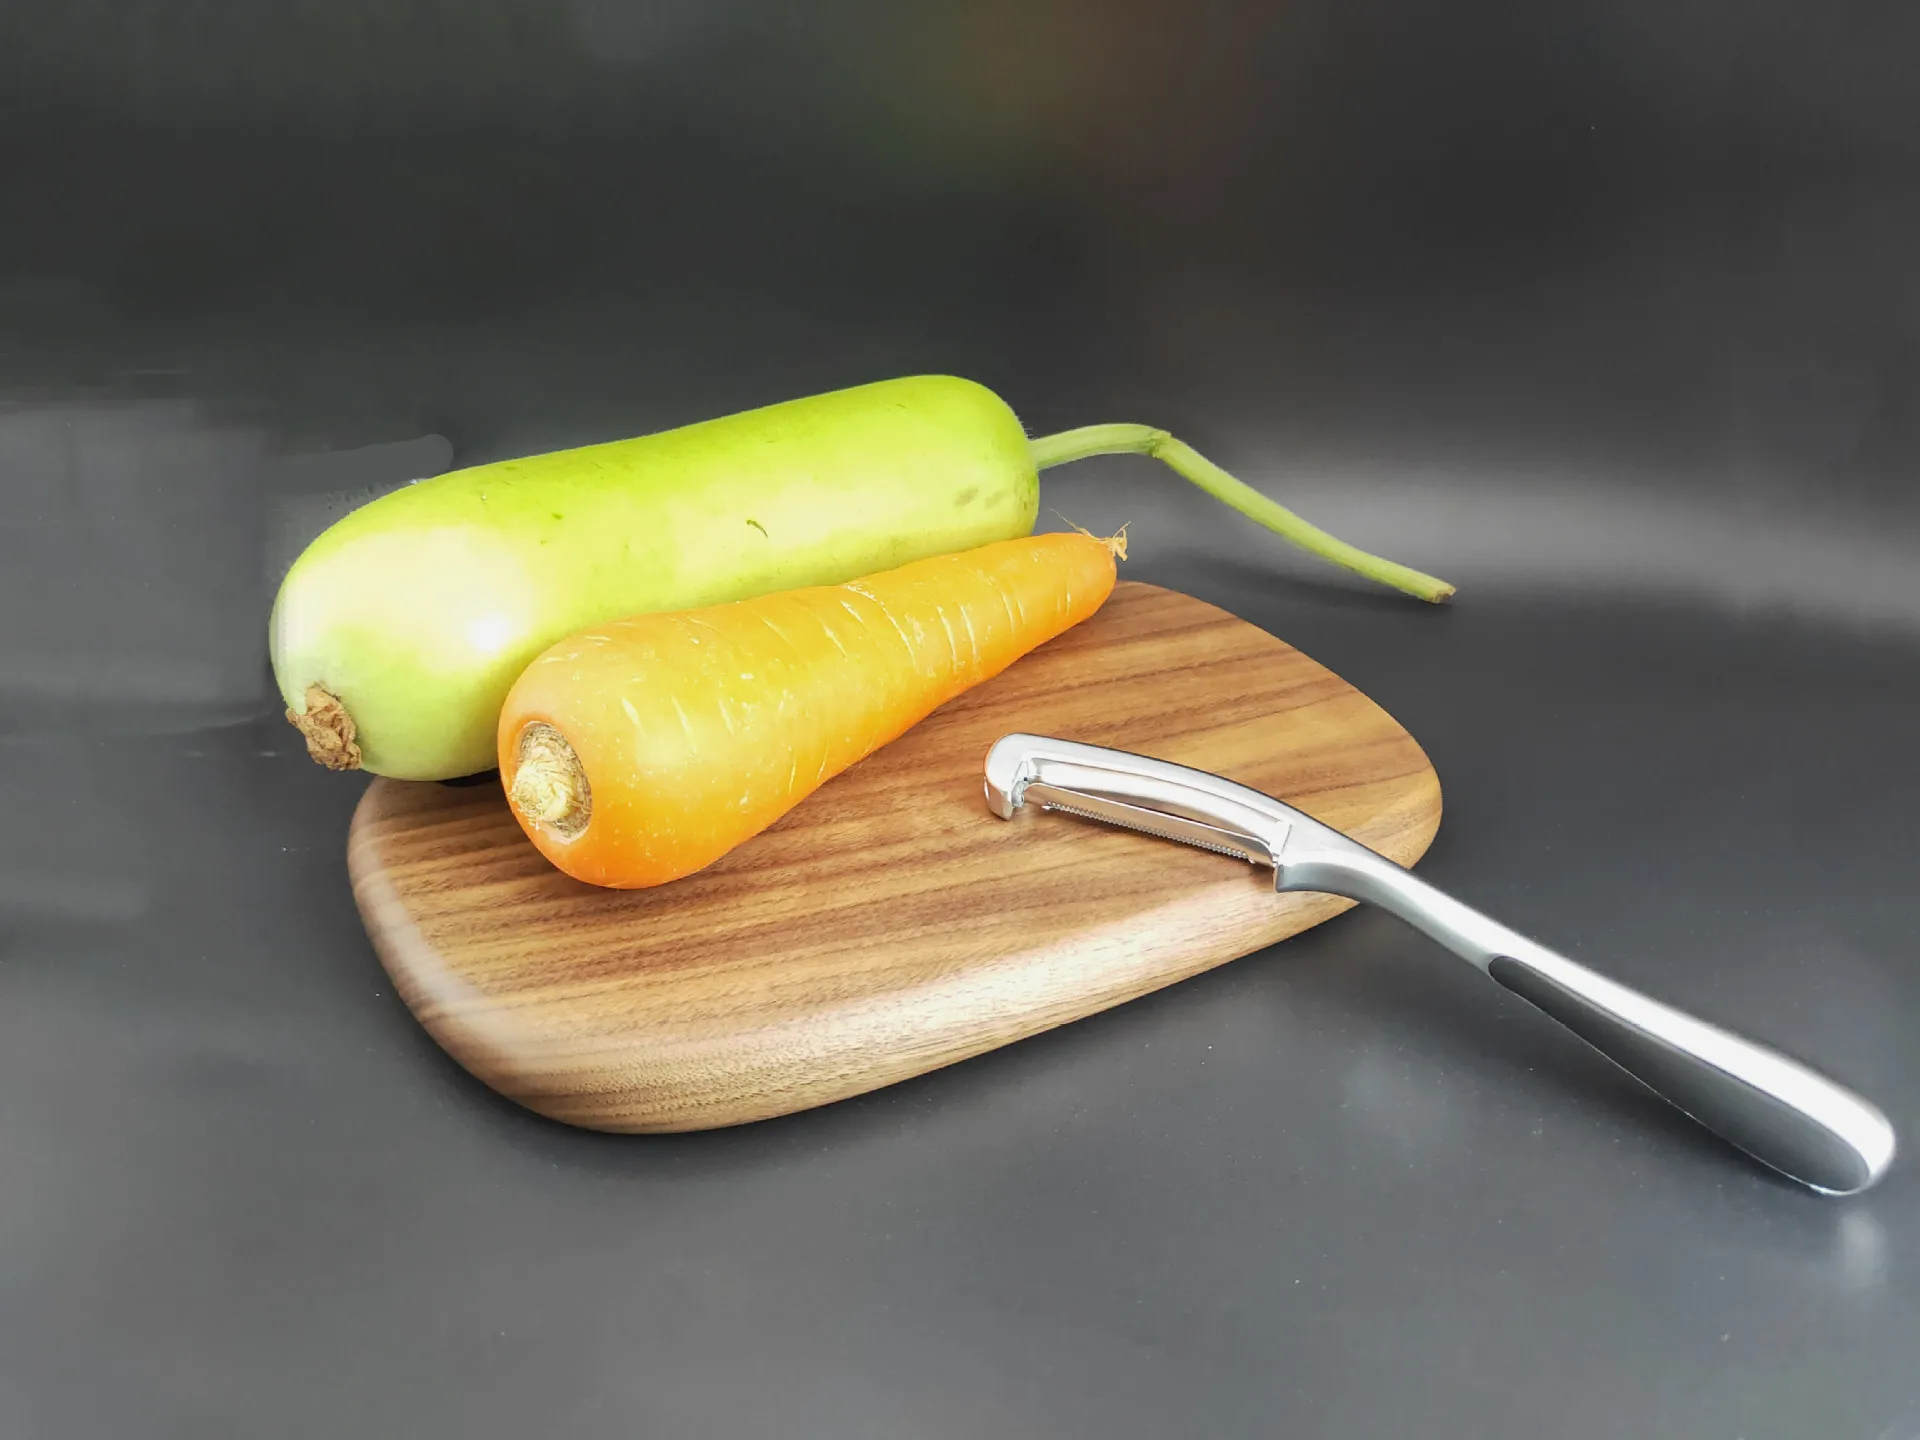 

Vegetable Peeler stainless Steel Potato Peeler Sharp Fruit Carrot Julienne peeler,Kitchen Gadget Accessories Vegetable slicer